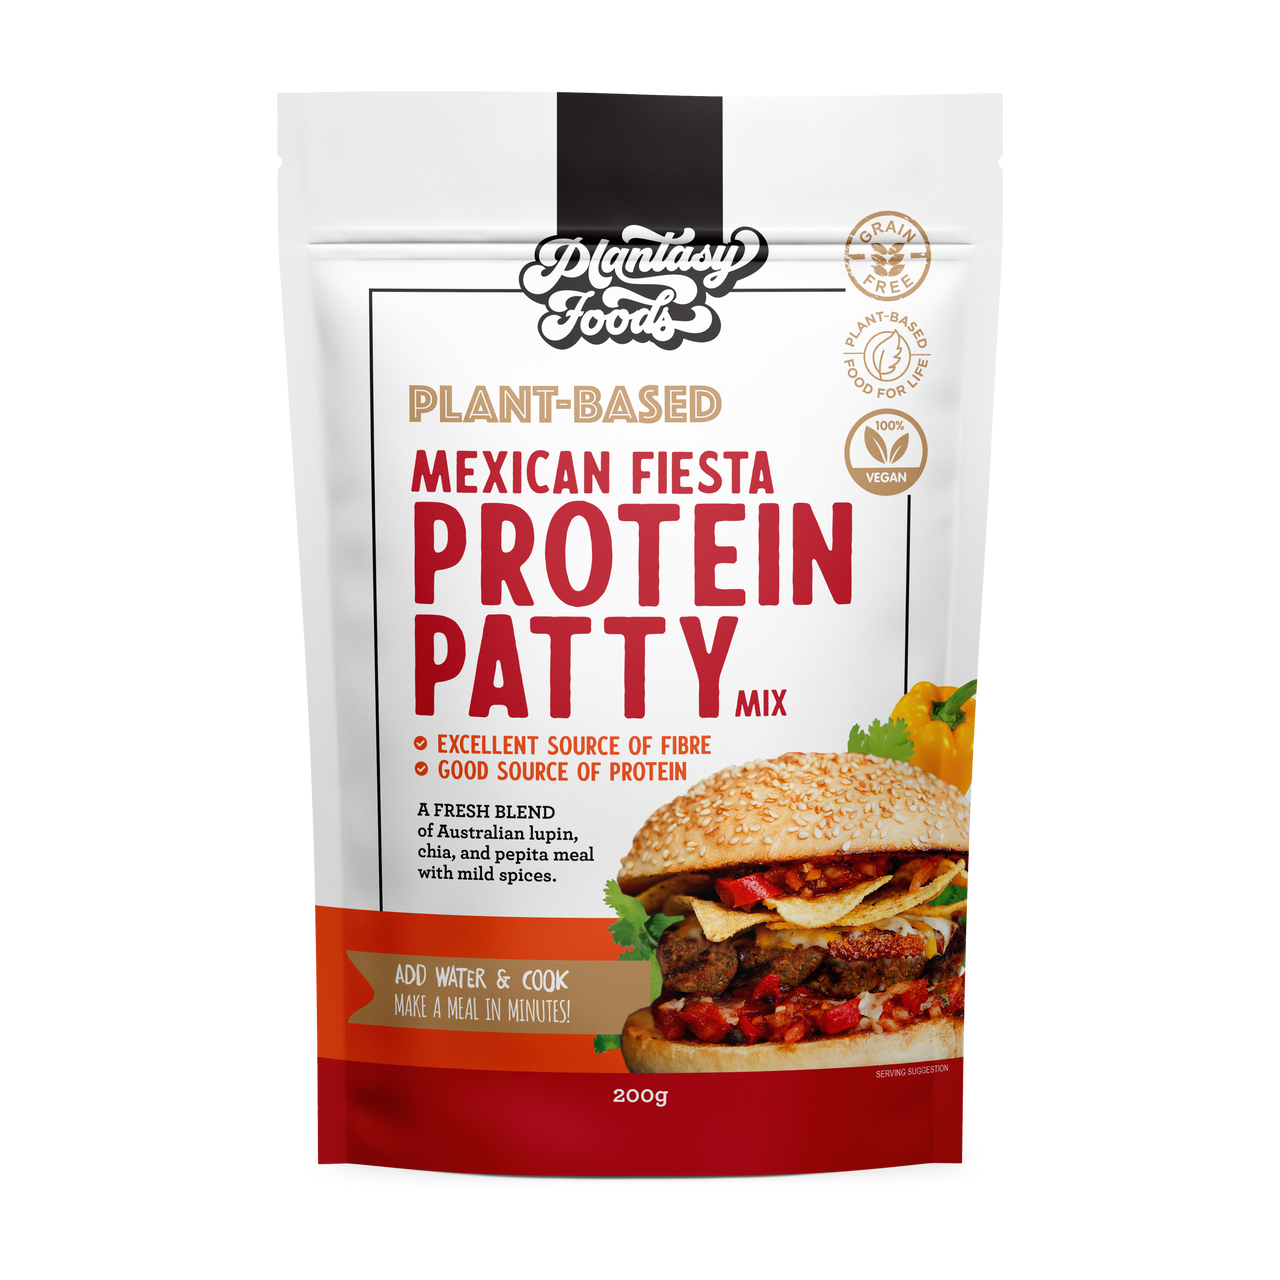 Plantasy Foods Vegan Protein Patty Mix - Mexican Fiesta